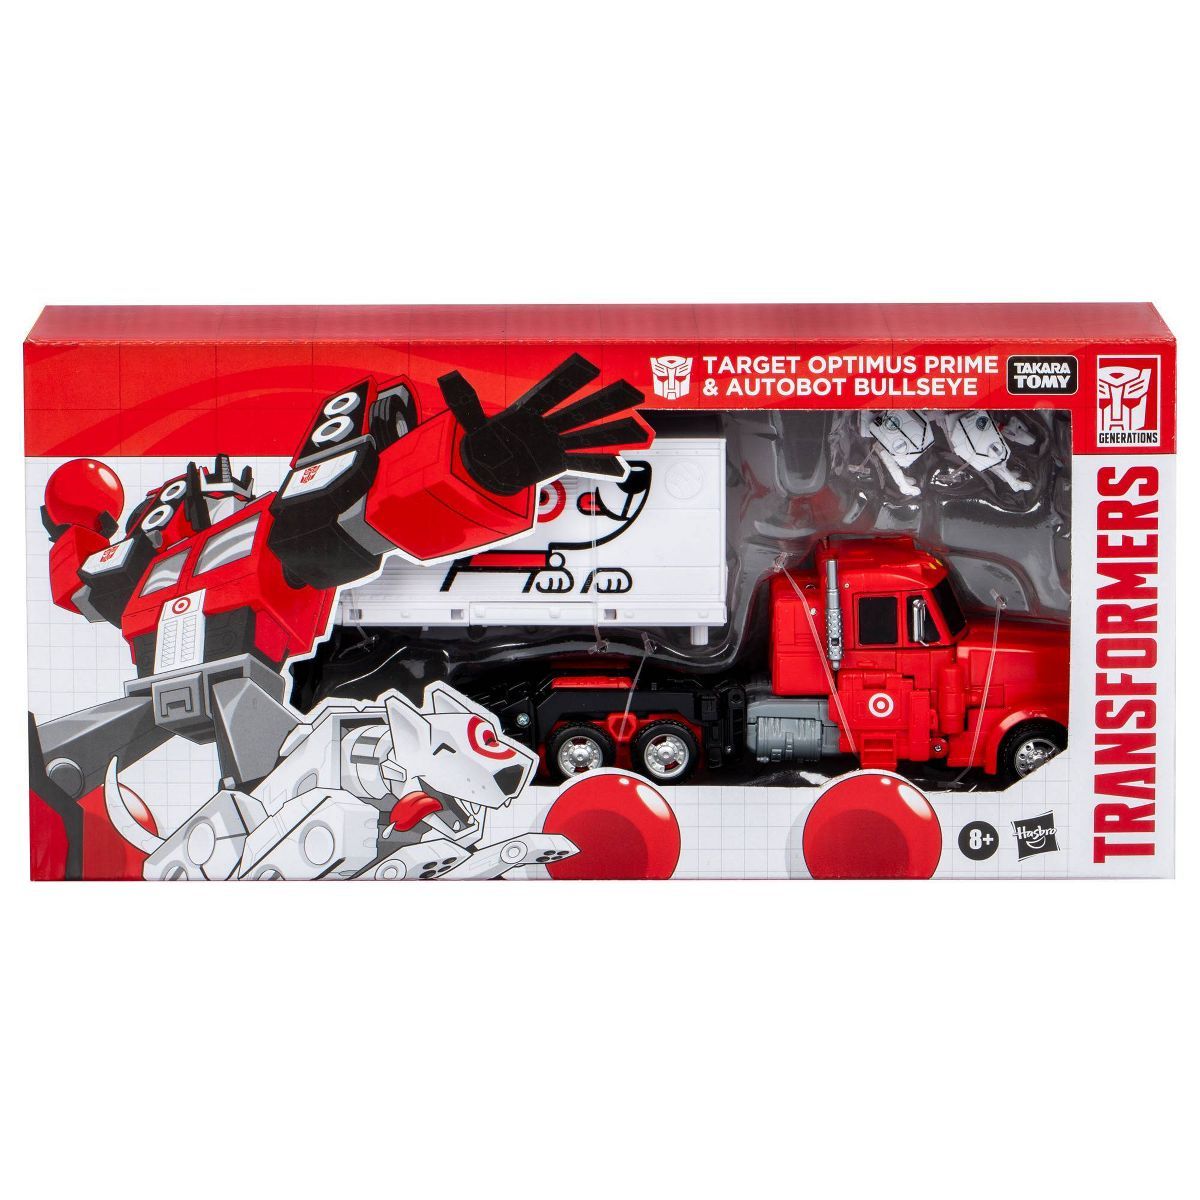 Transformers Target Optimus Prime and Autobot Bullseye Action Figure Set - 2pk (Target Exclusive) | Target